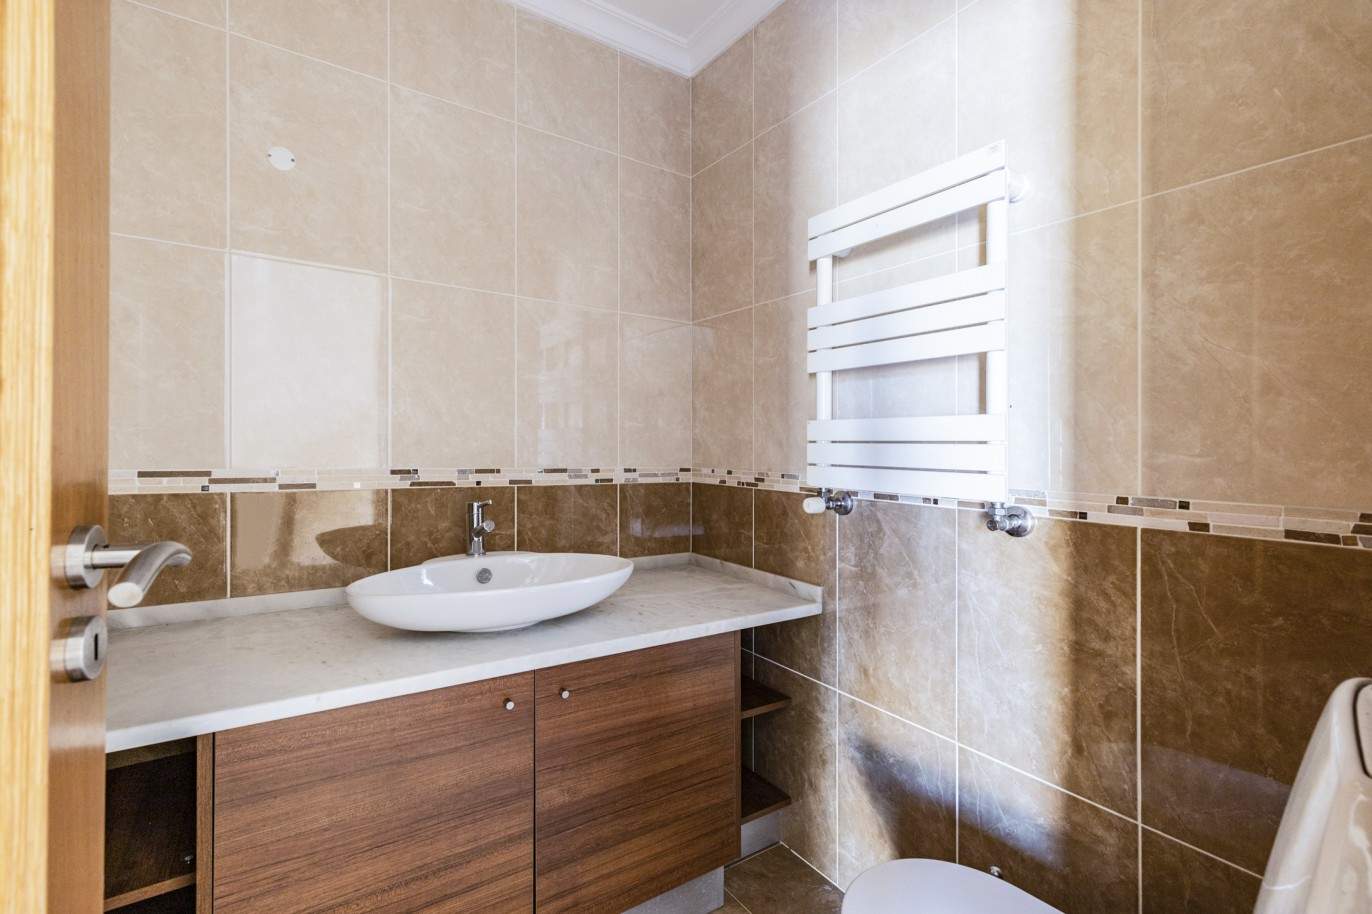 4 Bedroom Villa à vendre à Monte Judeu, Portimão, Algarve_207303